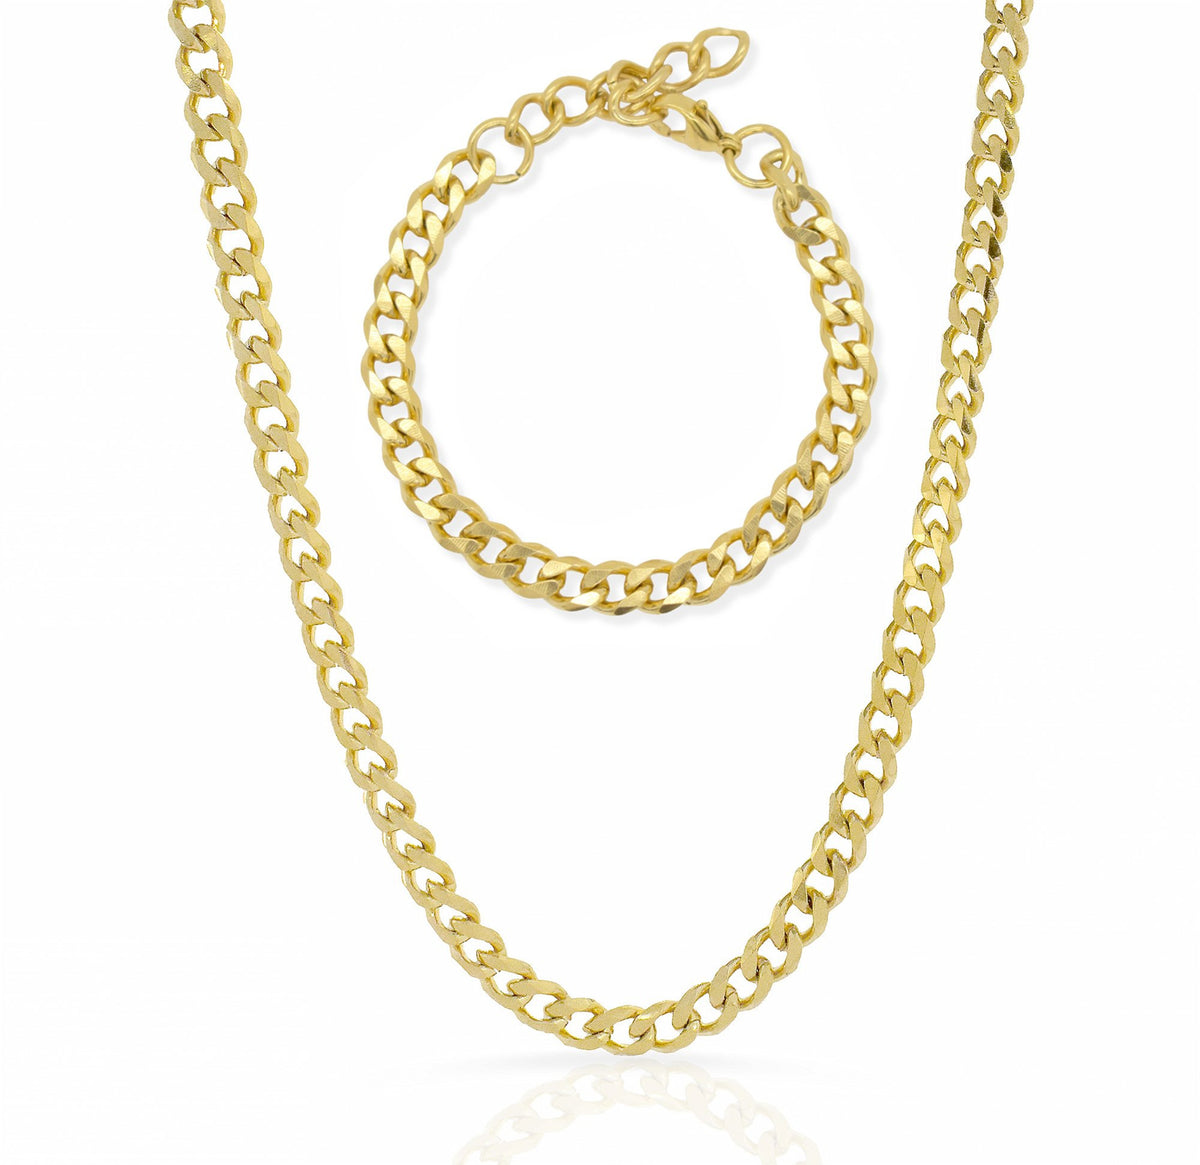 gold curb chain jewelry set waterproof